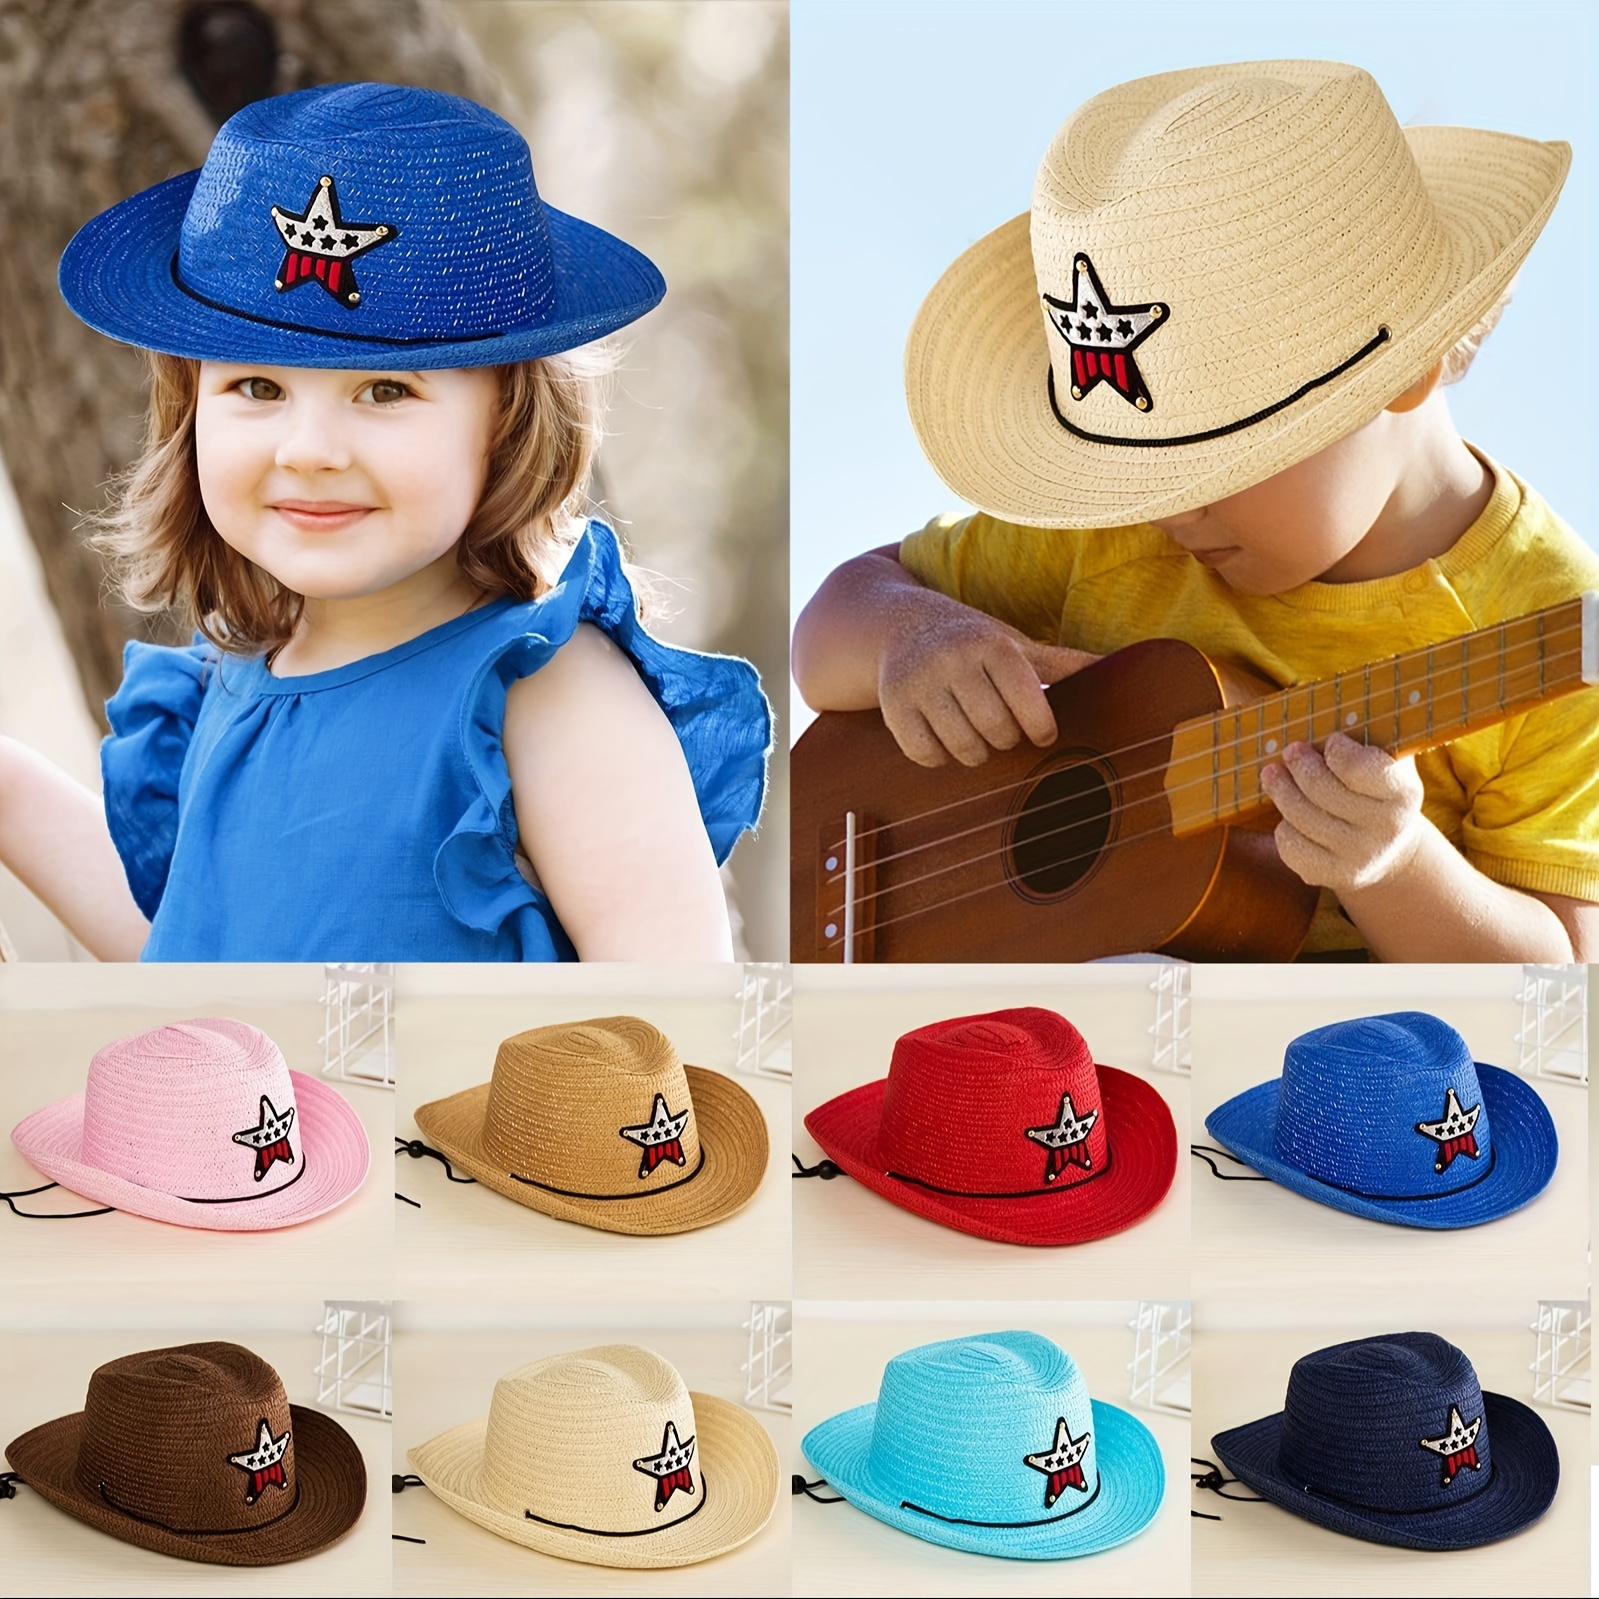 Jacobson Children's Red Felt Cowboy Hat